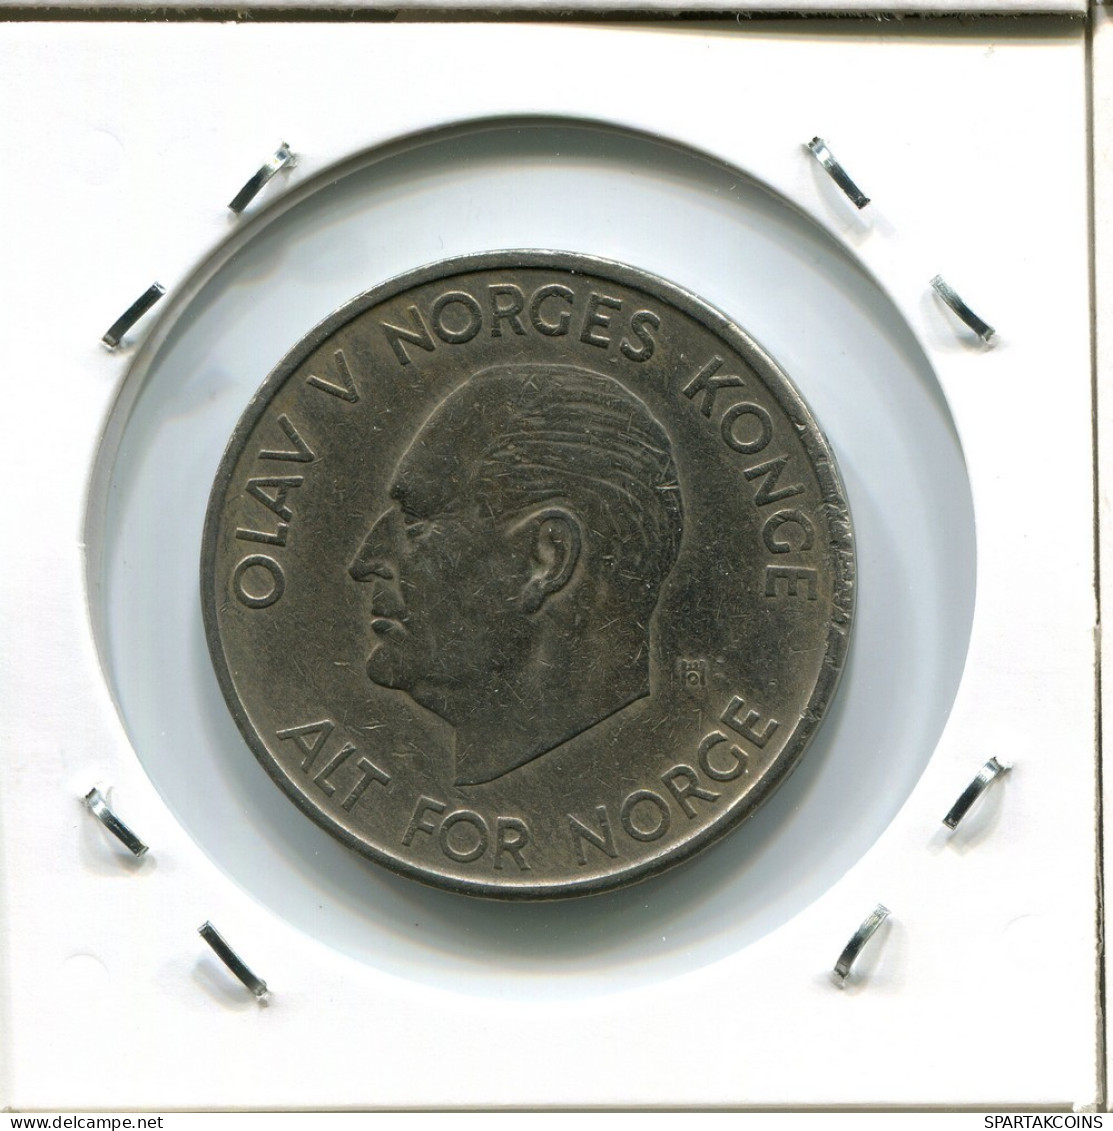 1 KRONE 1964 NORWAY Coin #AR751.U.A - Norwegen